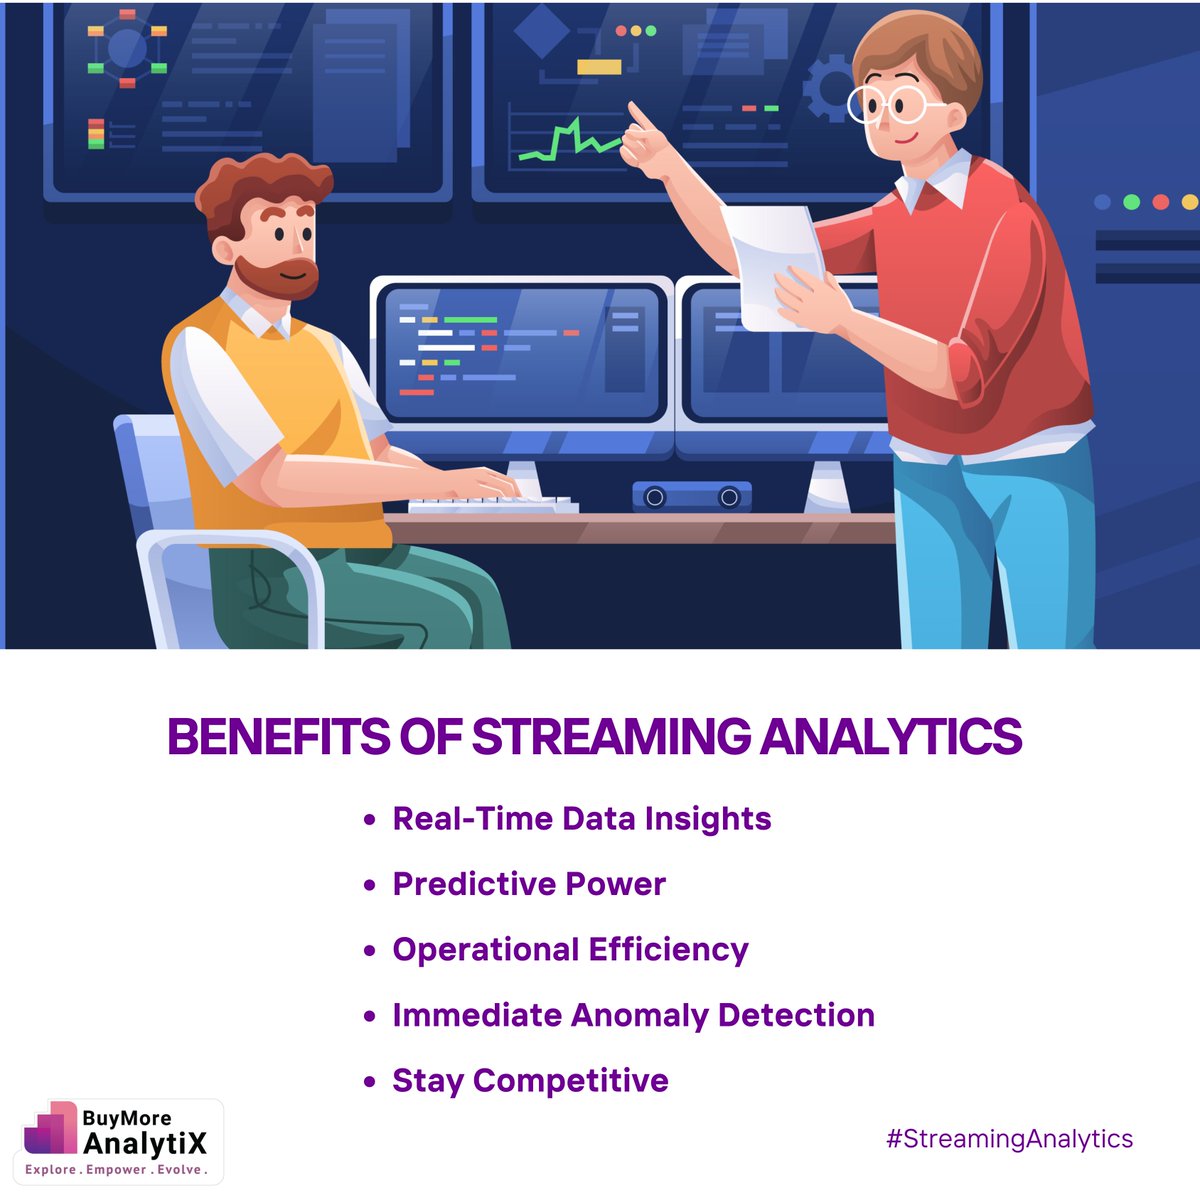 Benefits of Streaming Analytics for Big Data! 🚀

#StreamingAnalytics #DataInsights #PredictivePower #OperationalEfficiency #StayCompetitive #RealTimeData #TechnicalBenefits #AnomalyDetection #DataAnalytics #BusinessIntelligence #DataScience #BigData #BuymoreAnalytix